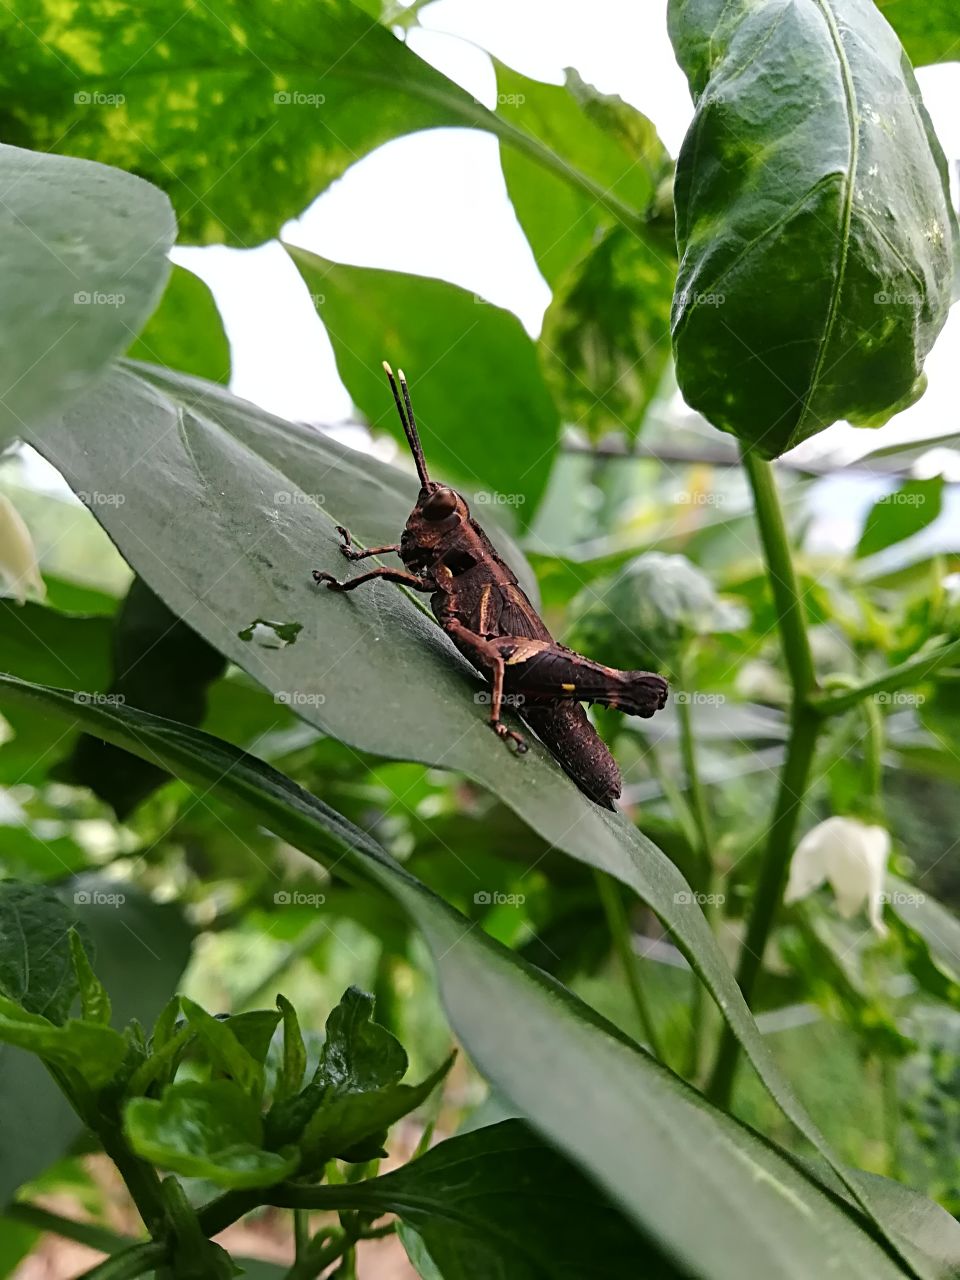 grasshopper on chilly leaf